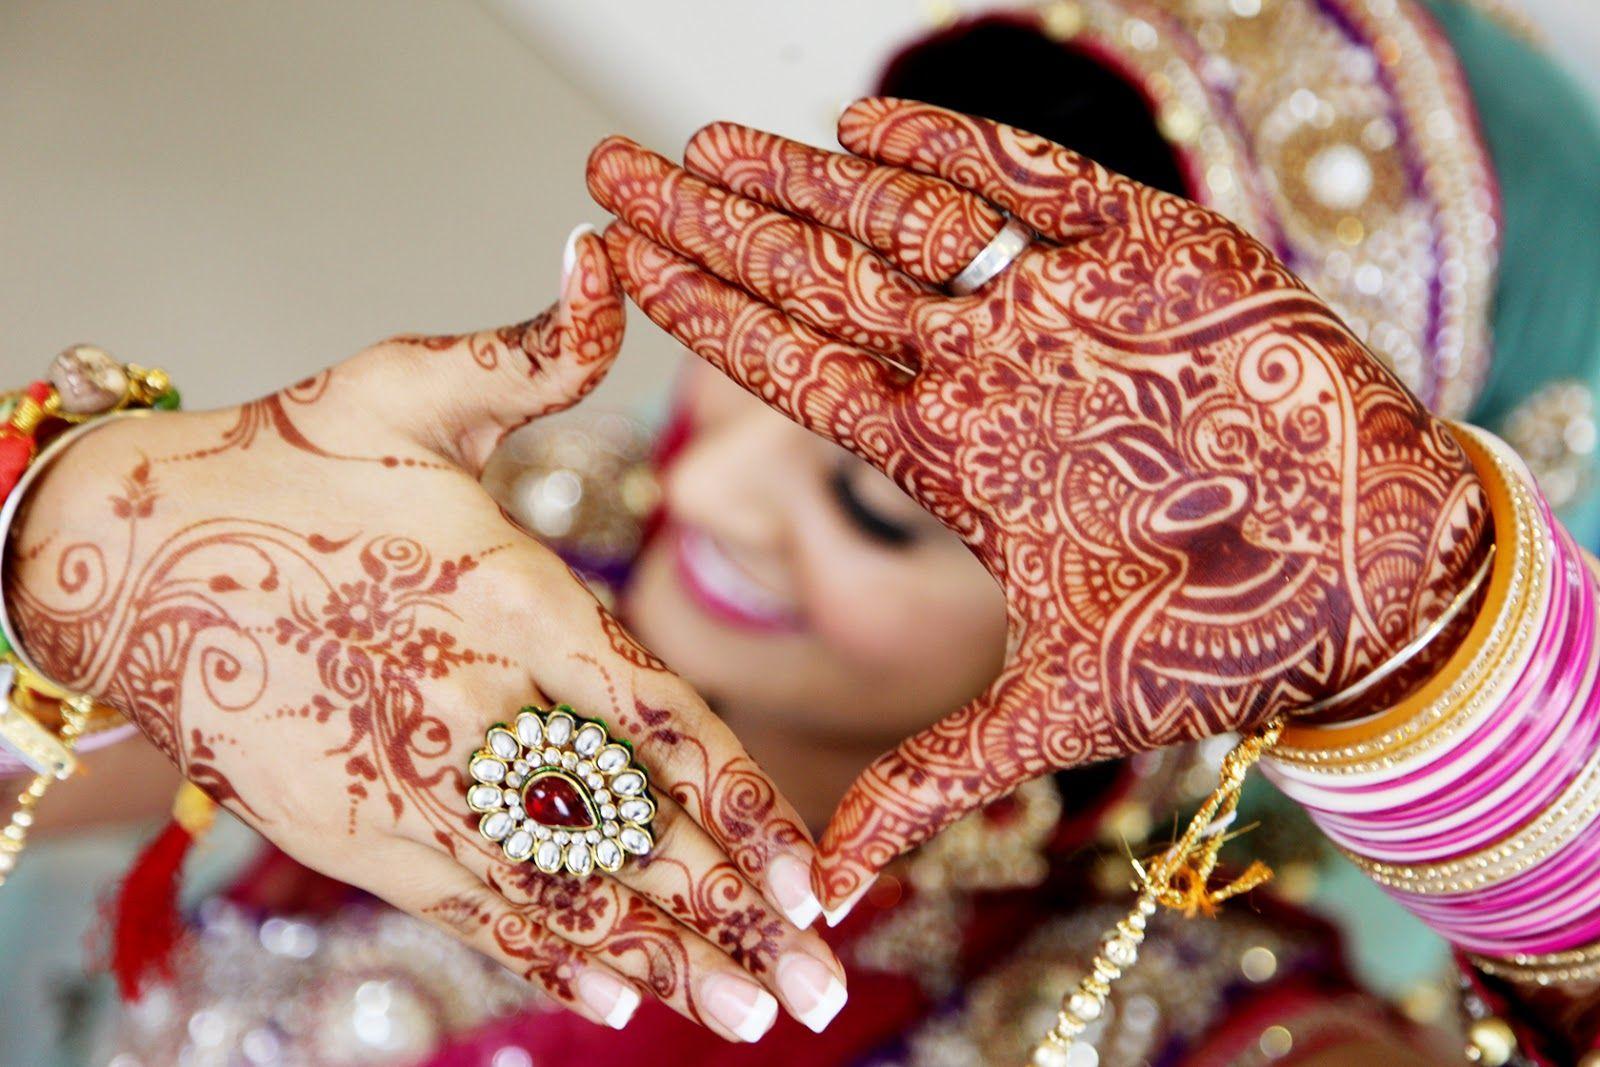 Wallpaper. Image. Picpile: Indian Bridal